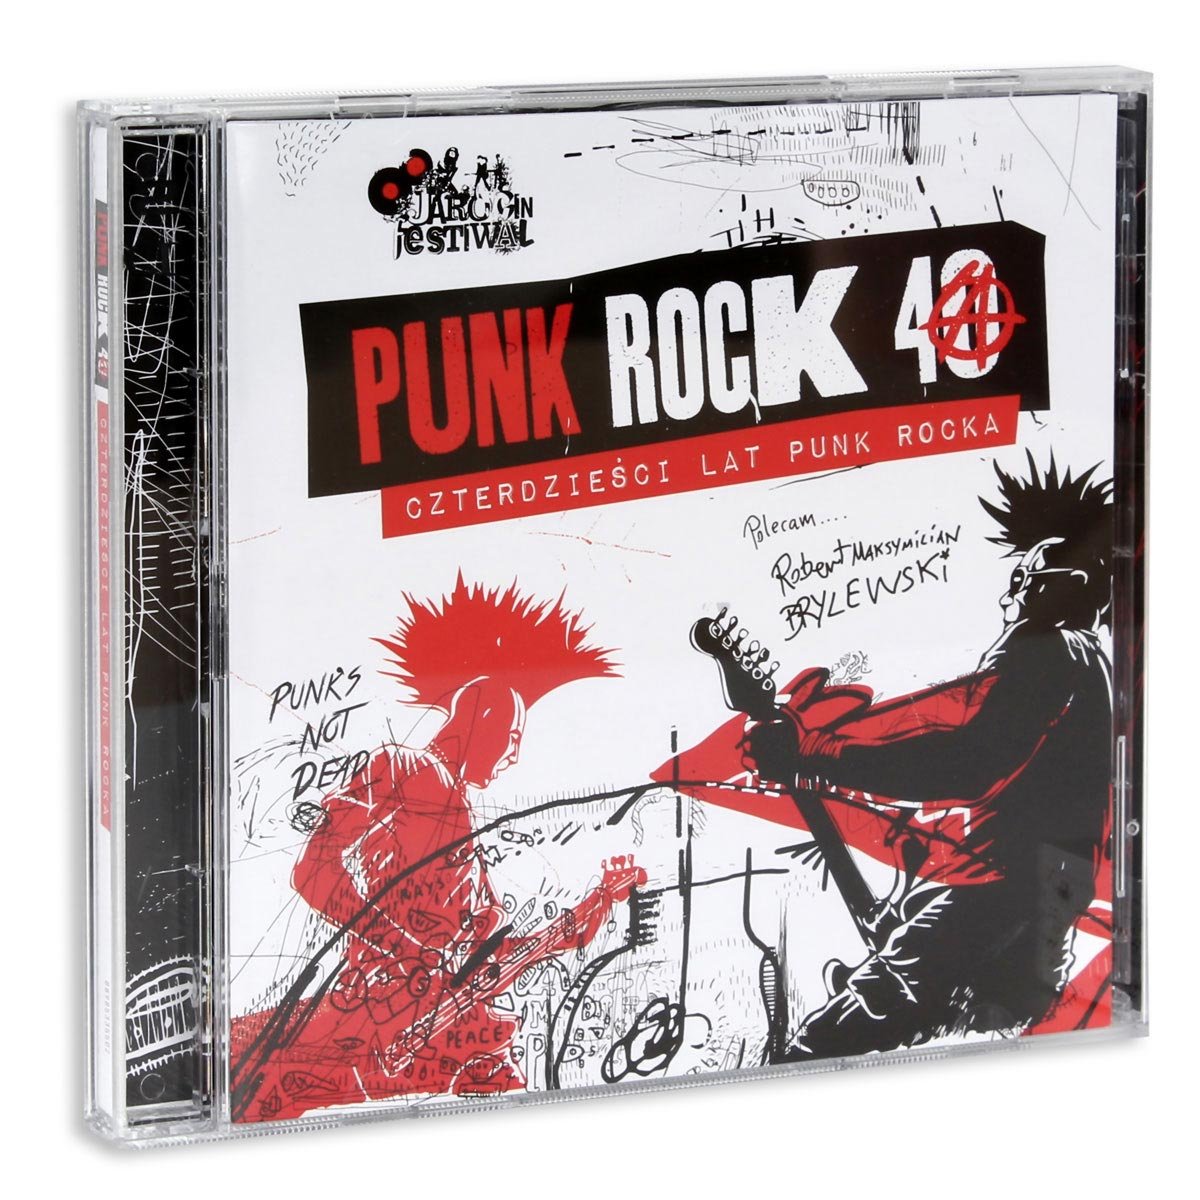 Punk Rock 40 Czterdzieści lat punk rocka Various Artists Muzyka